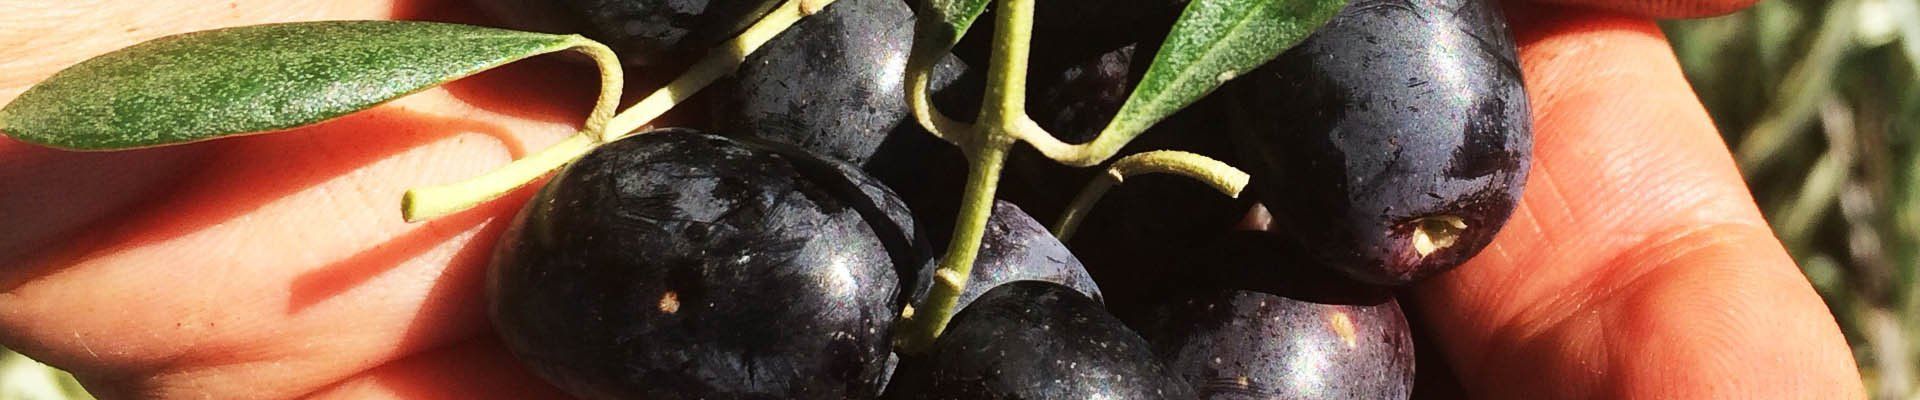 Ripe black olives